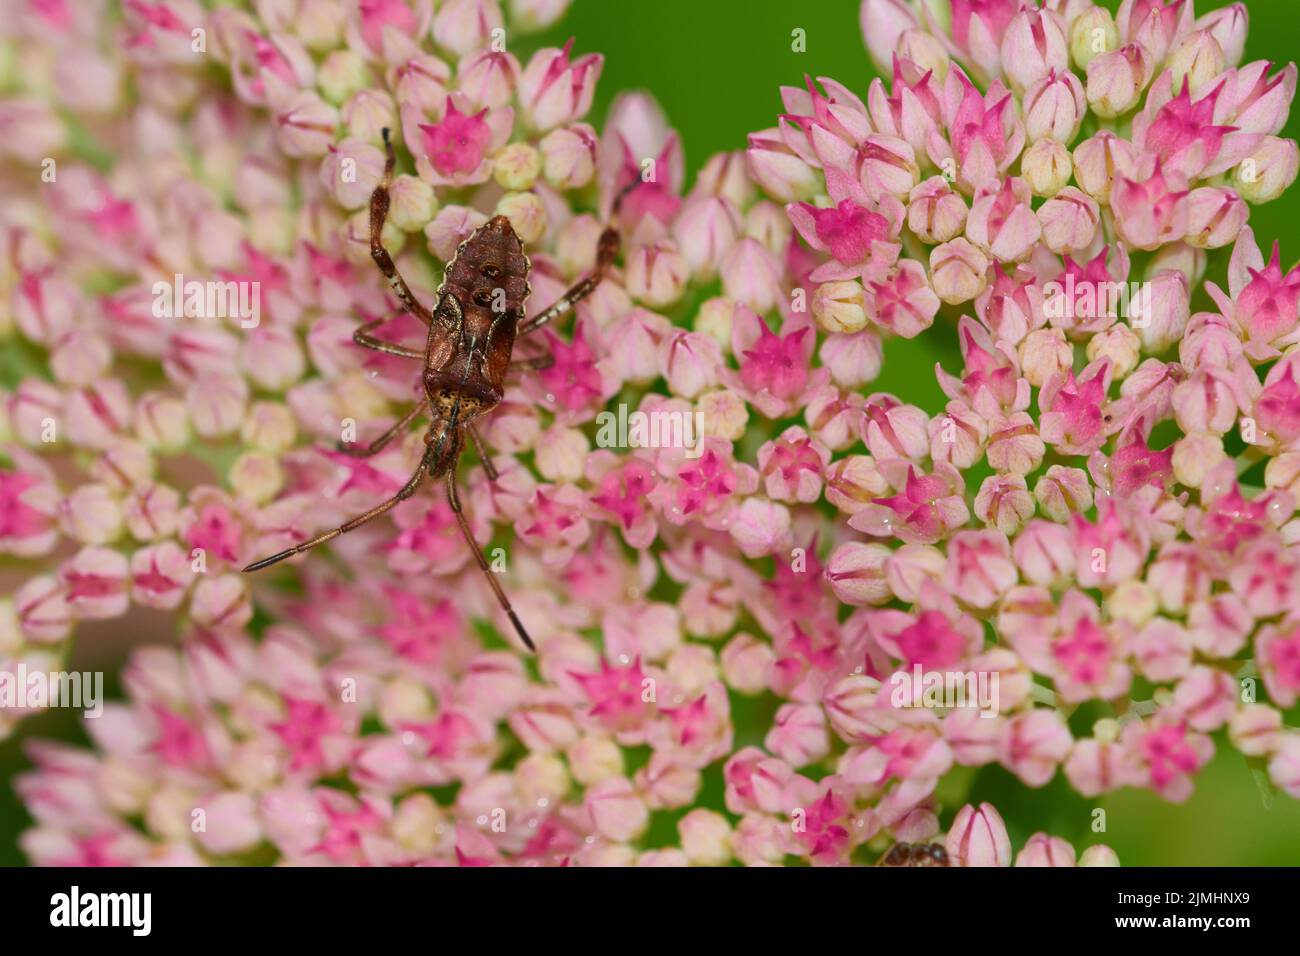 Ninfa occidentale conifera seme bug Foto Stock